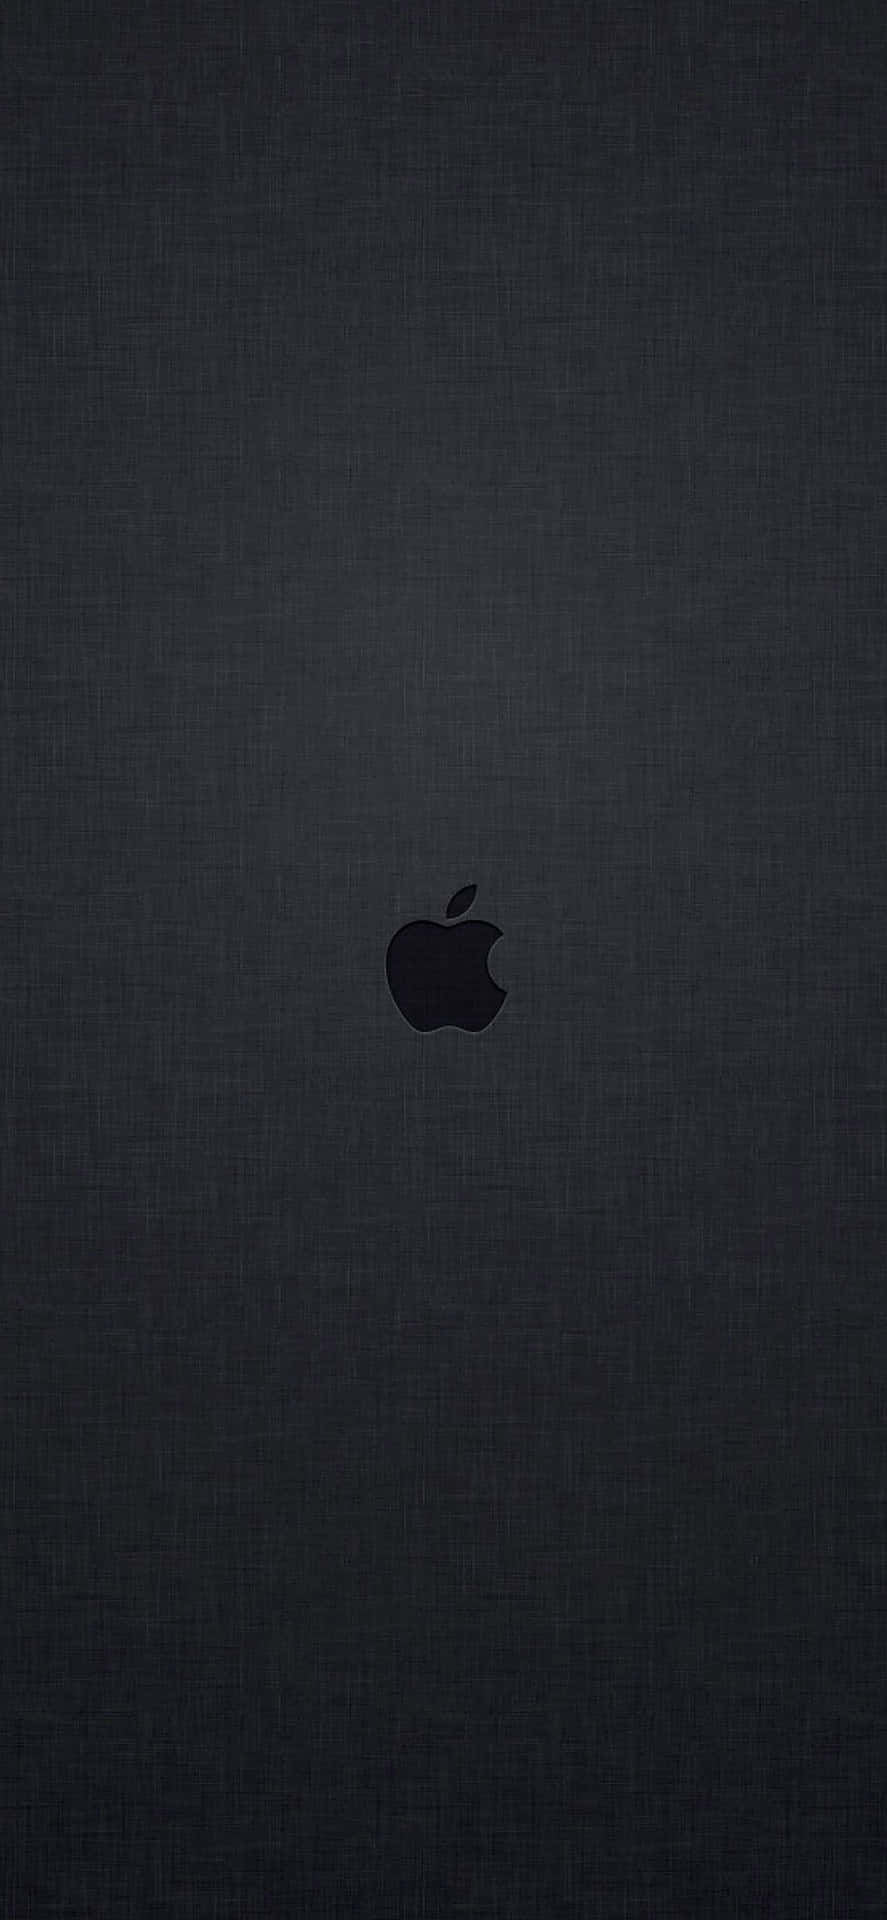 Caption: Close-up Shot Of Silver Apple Inc. Logo On Dark Background